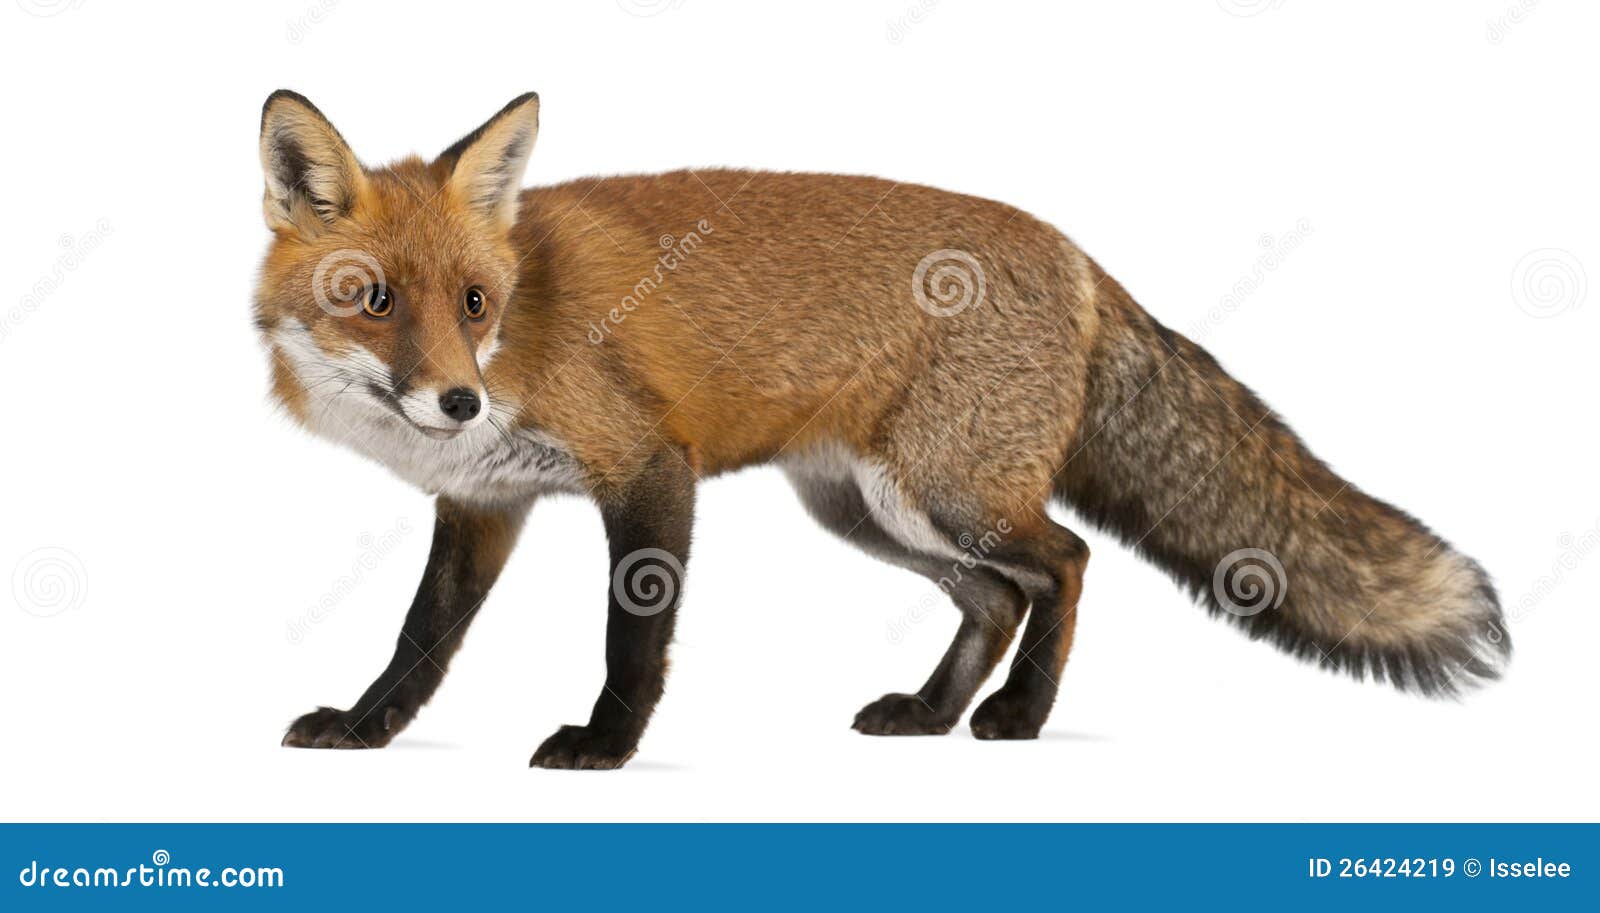 red fox, vulpes vulpes, 4 years old, walking